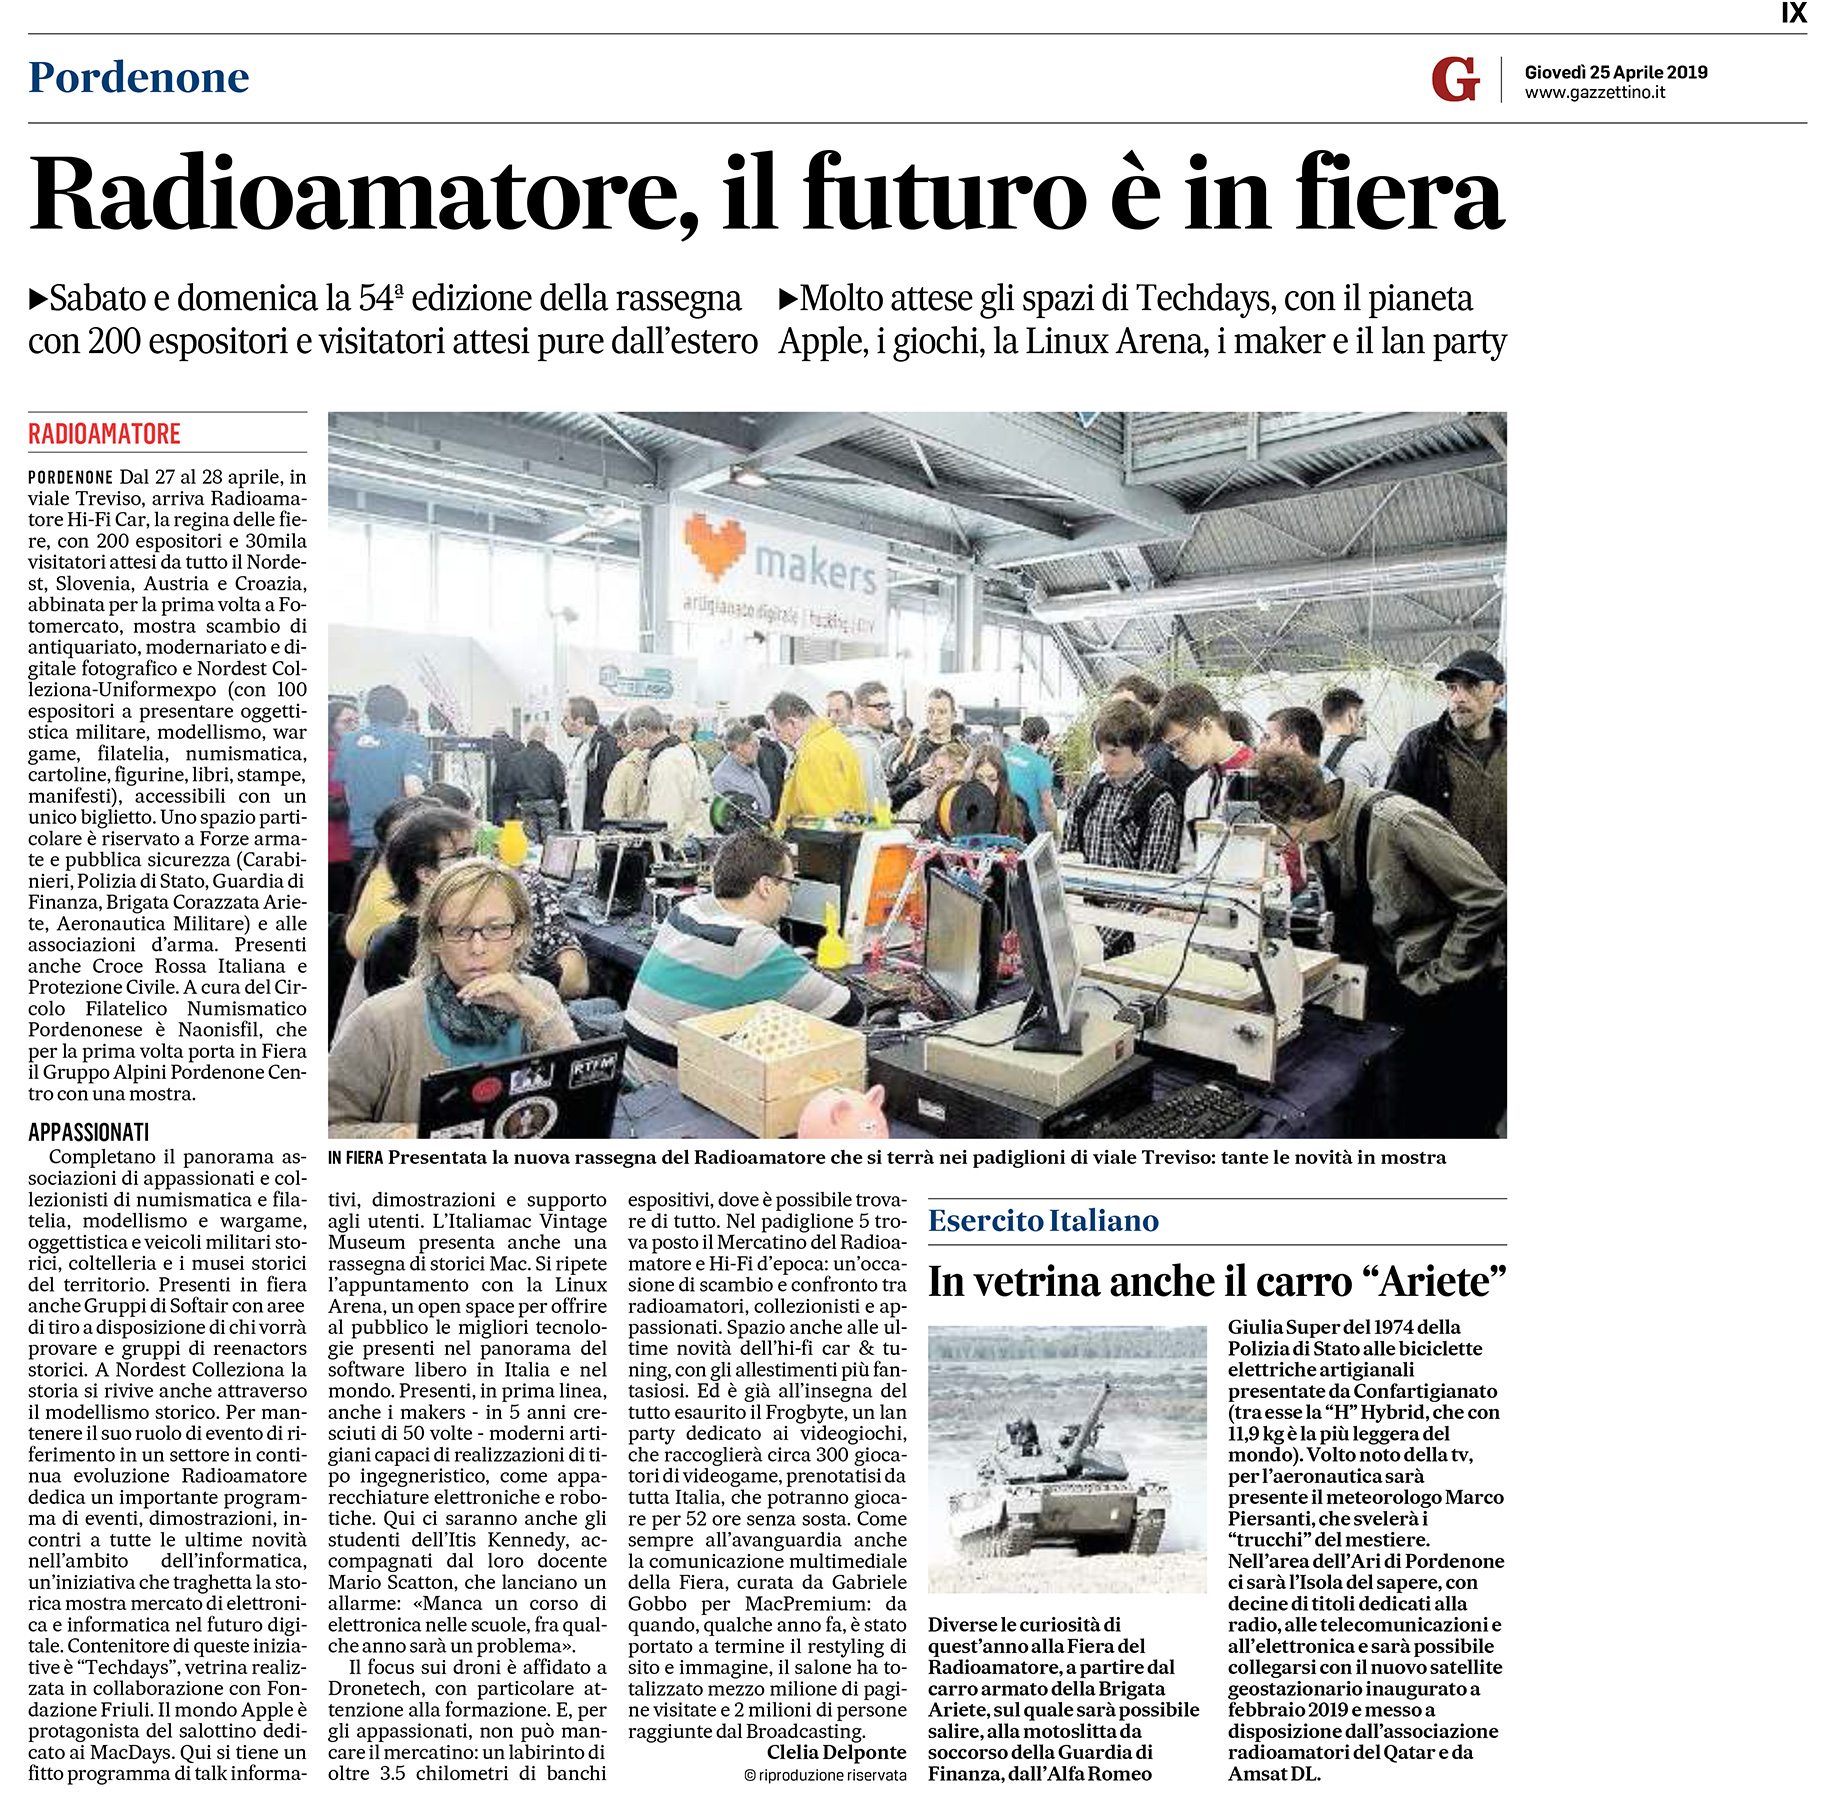 Gazzettino 250042019 Rassegna Stampa Radioamatore Fiera 2019